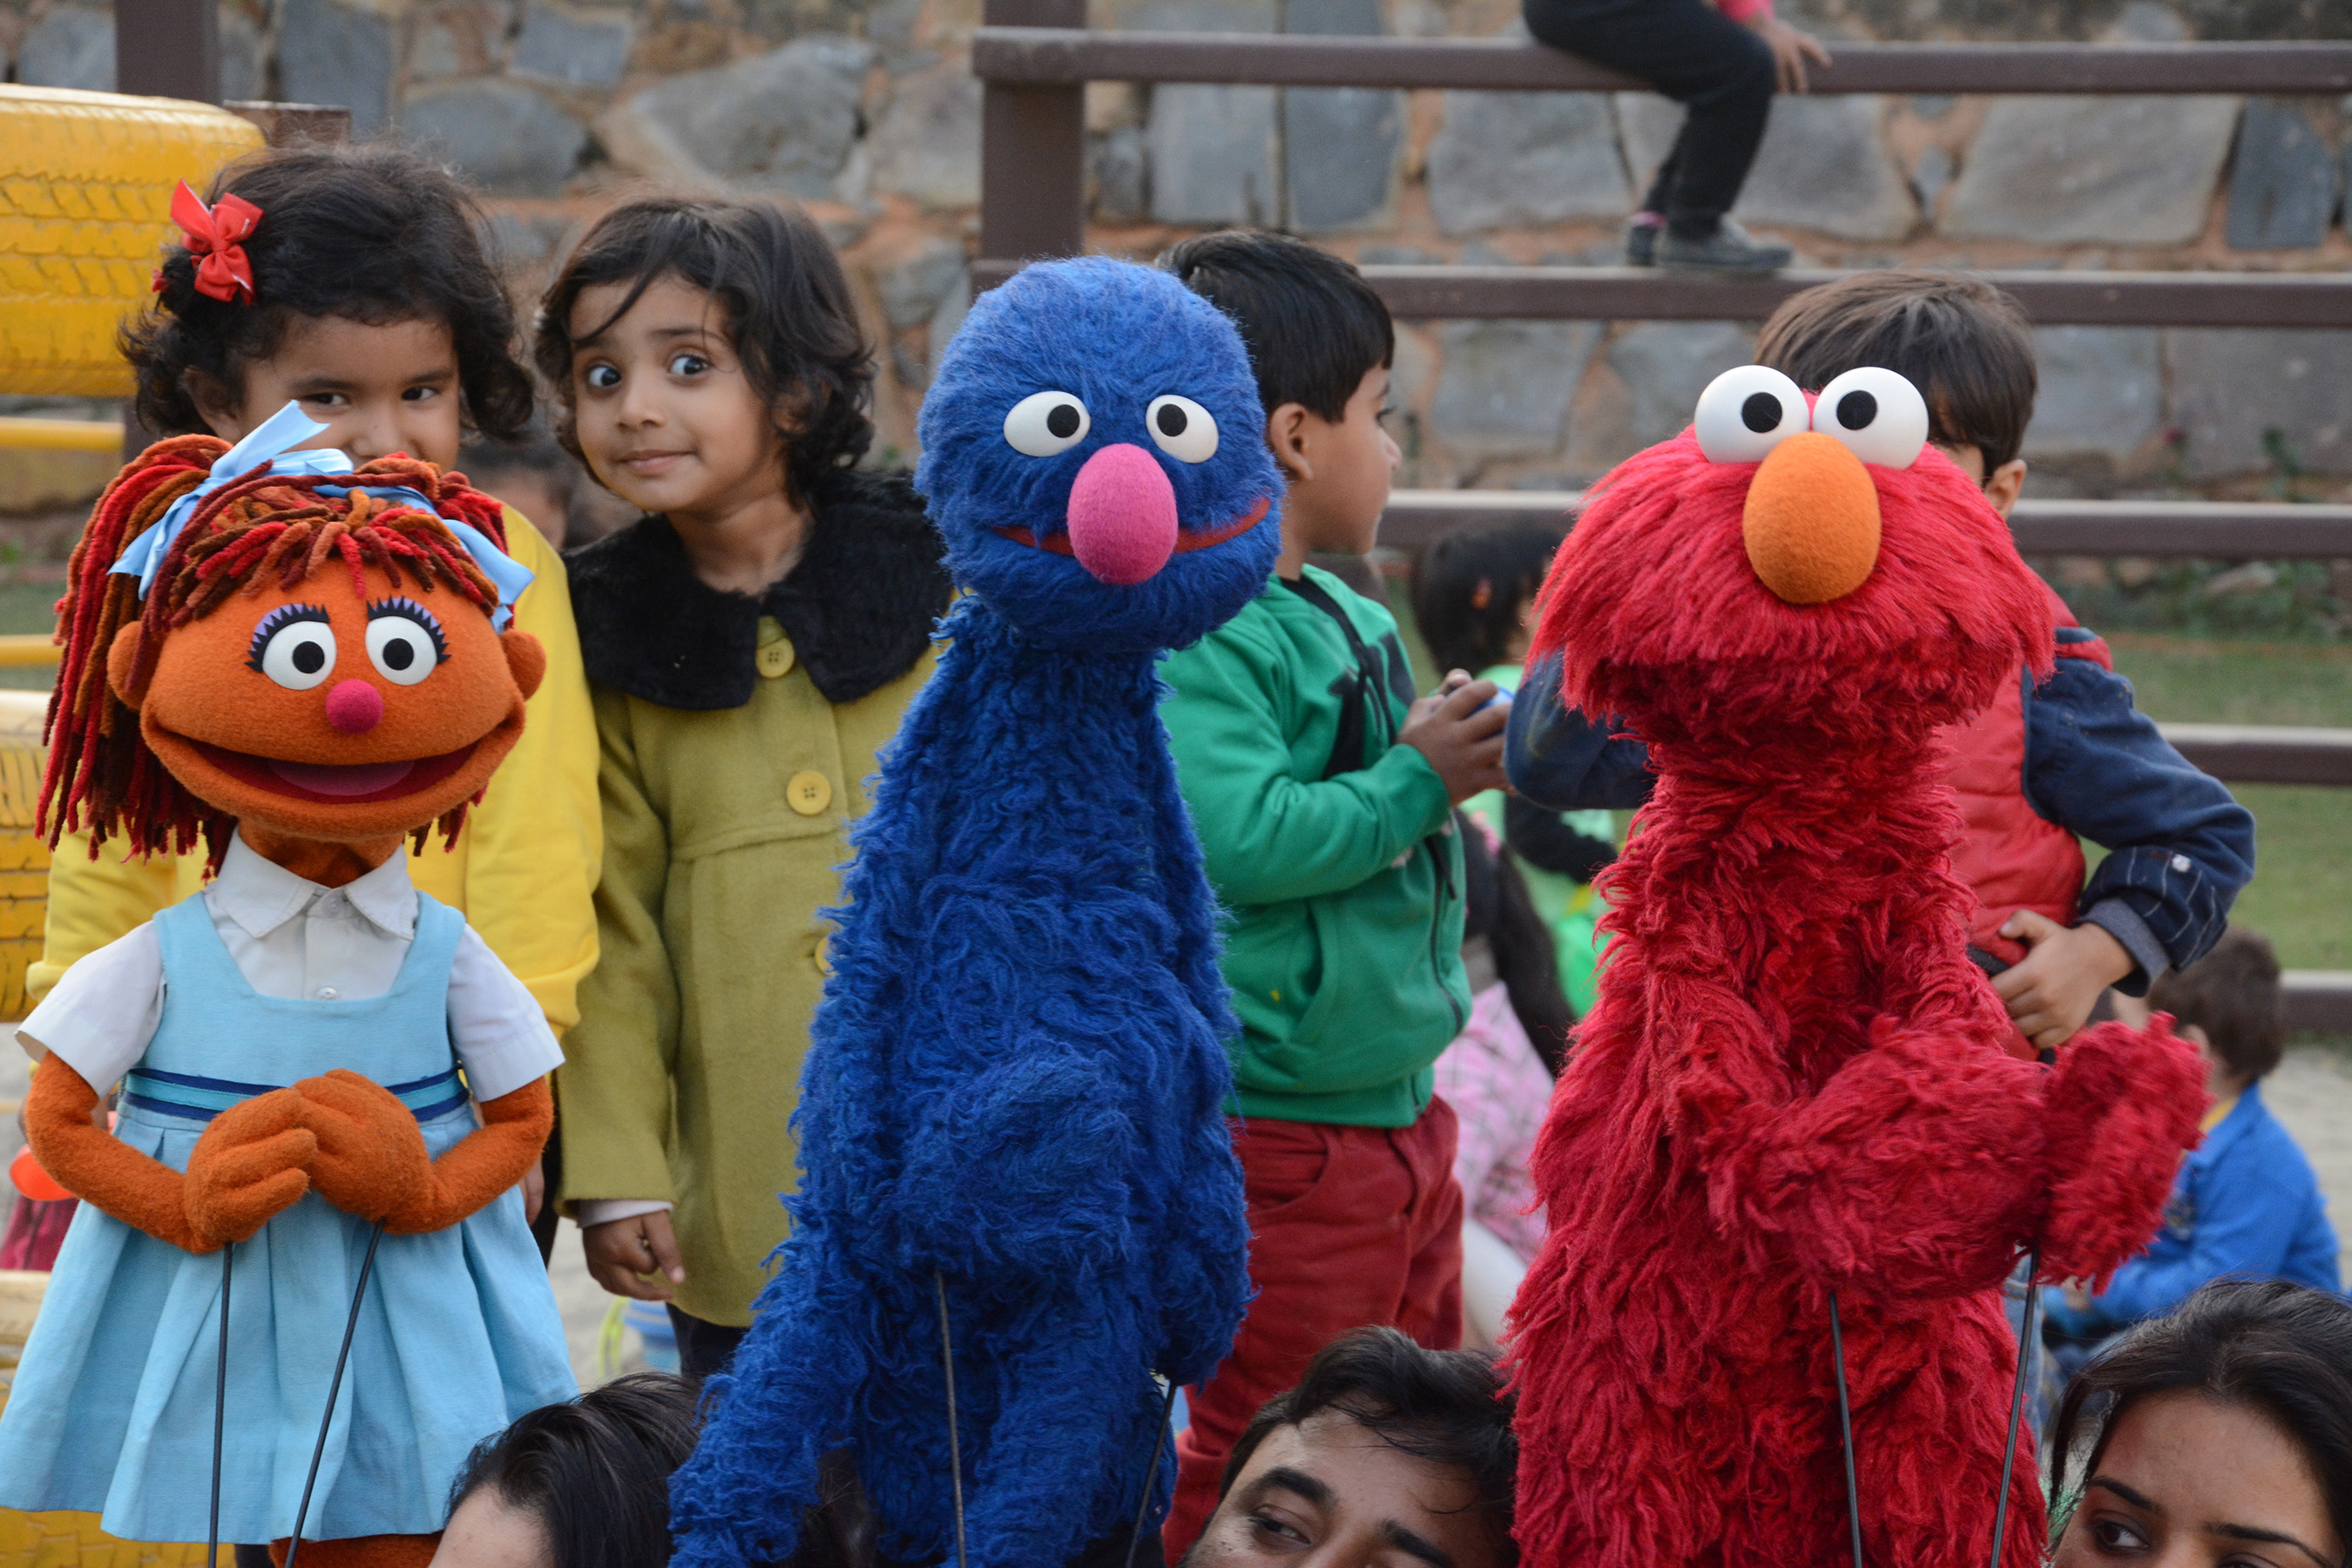 Sesame Street - The world’s largest preschool educator expan